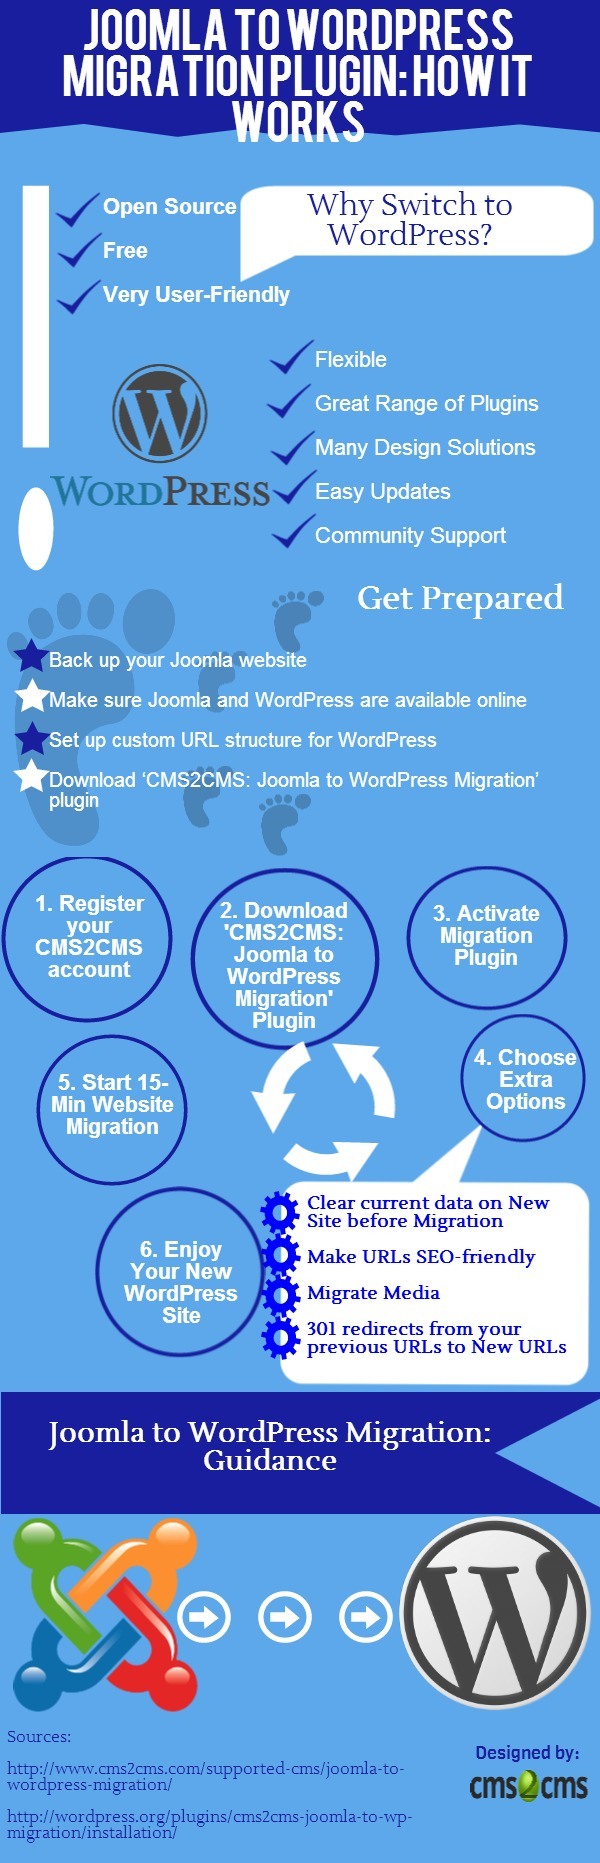 joomla-to-wordpress-migration-plugin-step-by-step-infographic